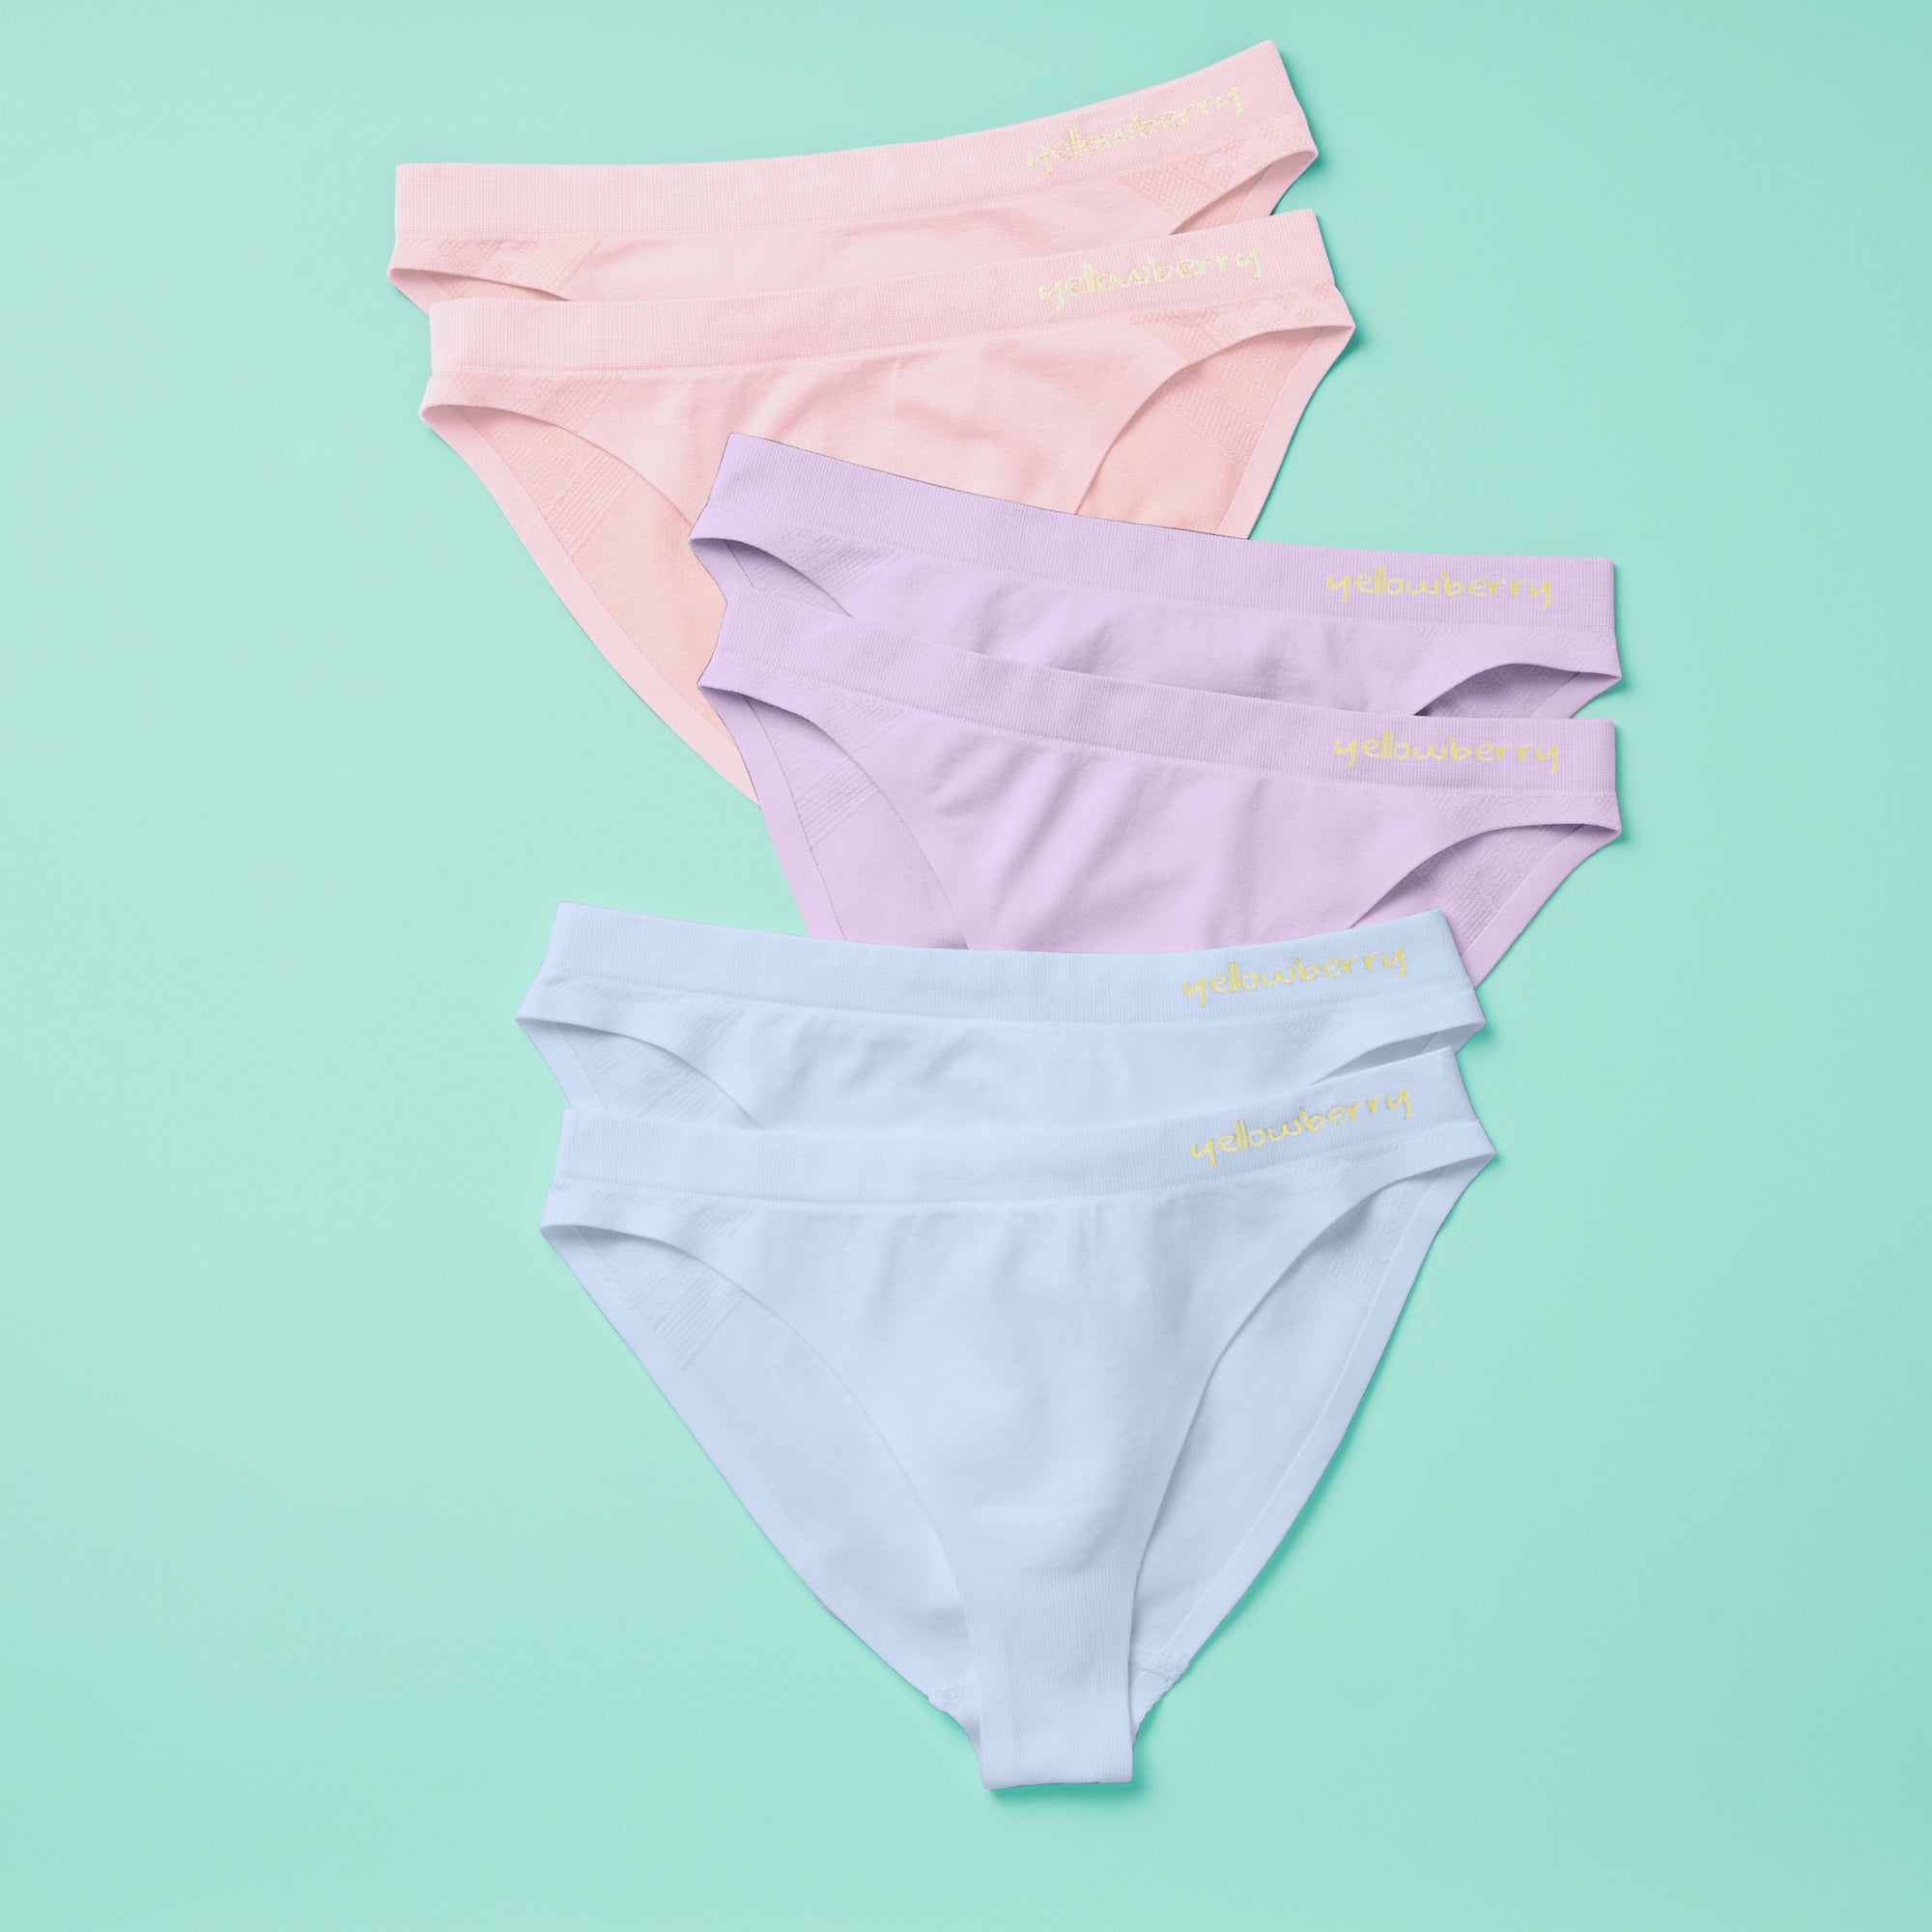 New Look Underwear & Panties for Women sale - discounted price